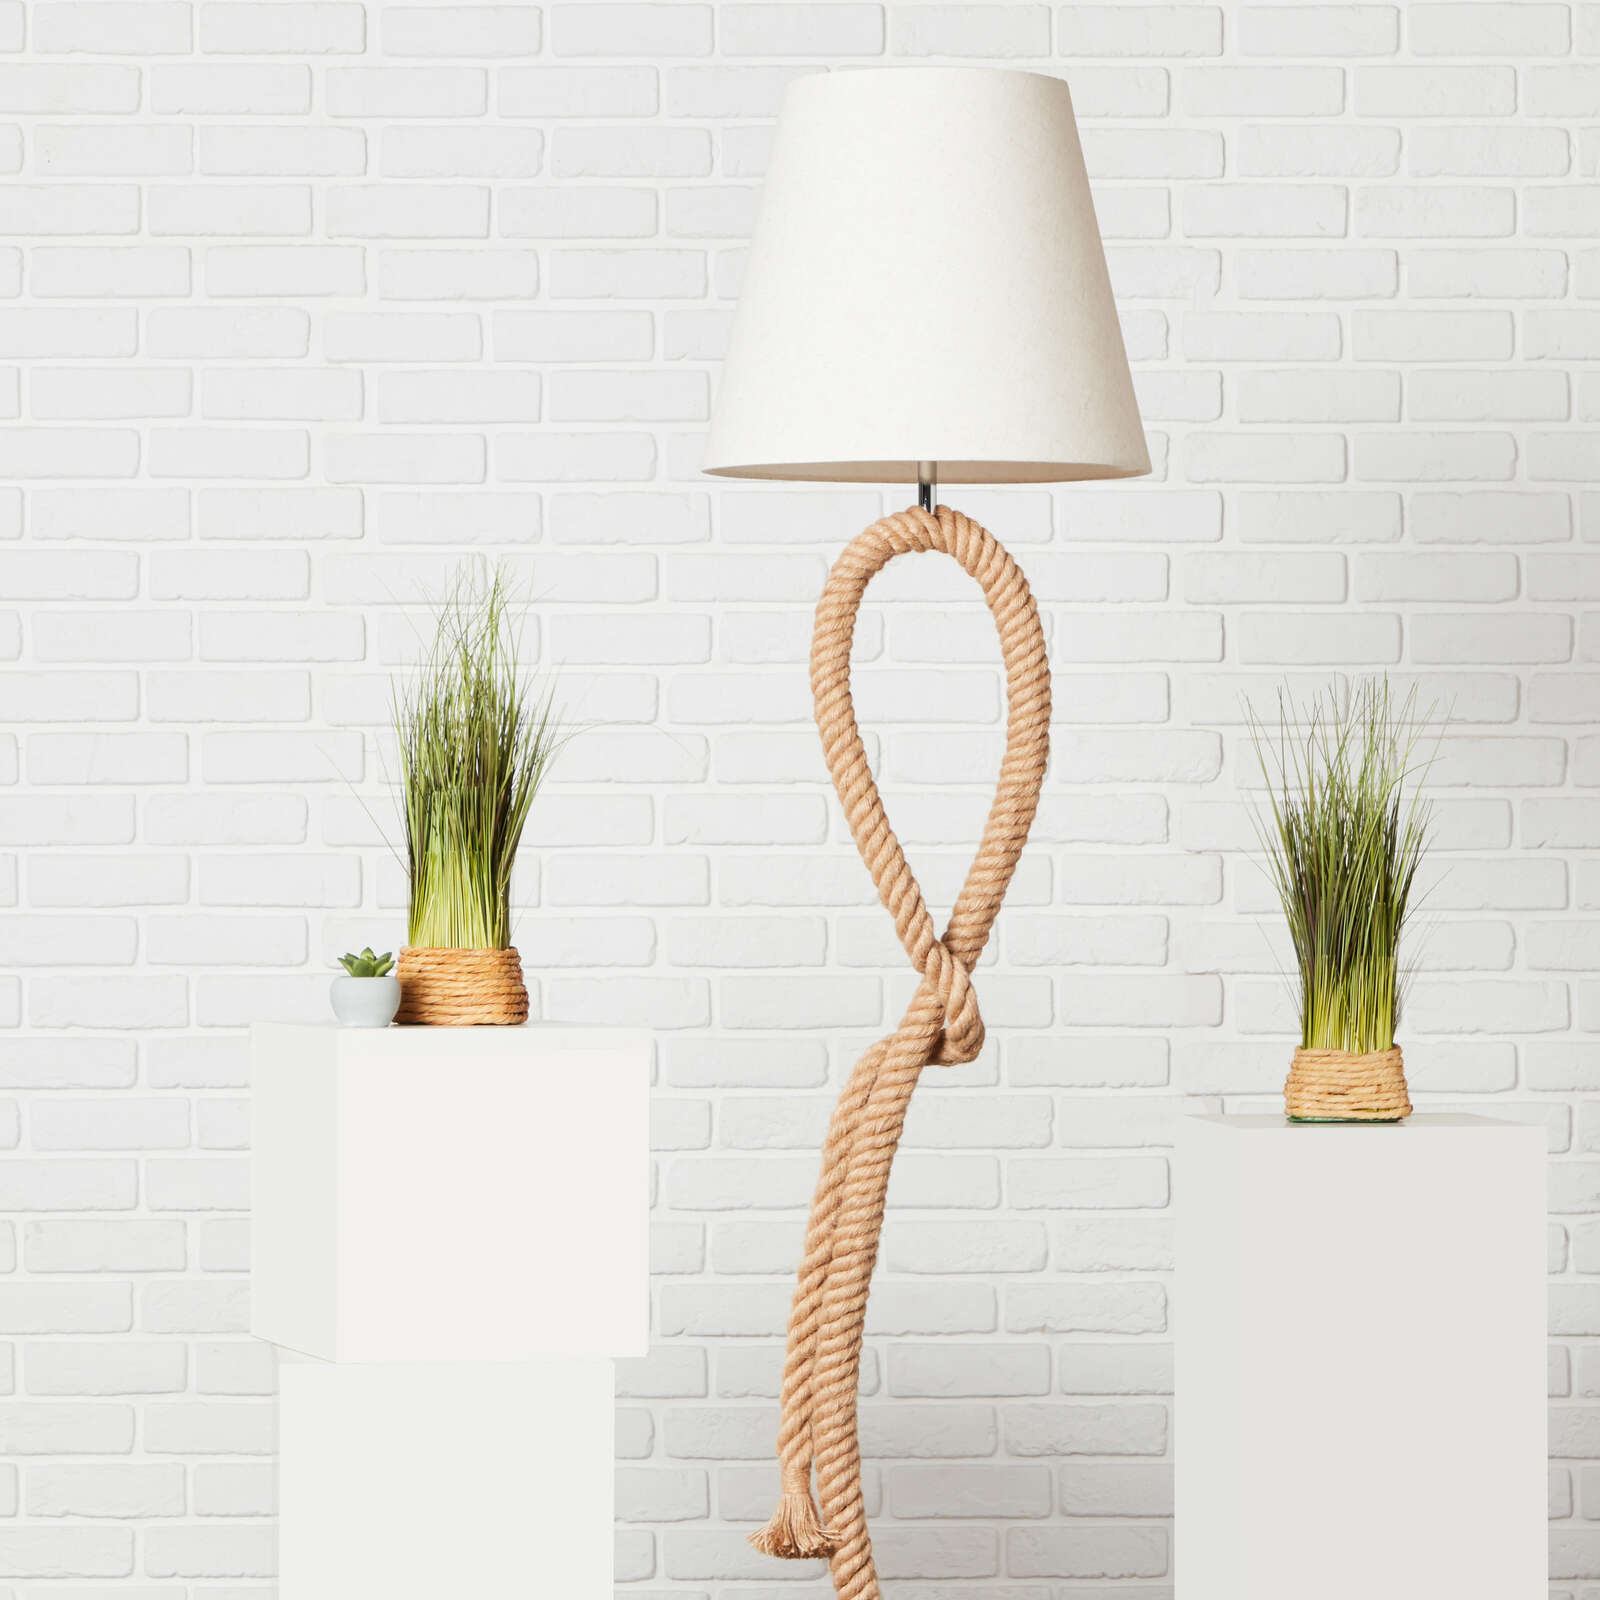             Floor lamp made of textile - Milan 4 - Brown
        